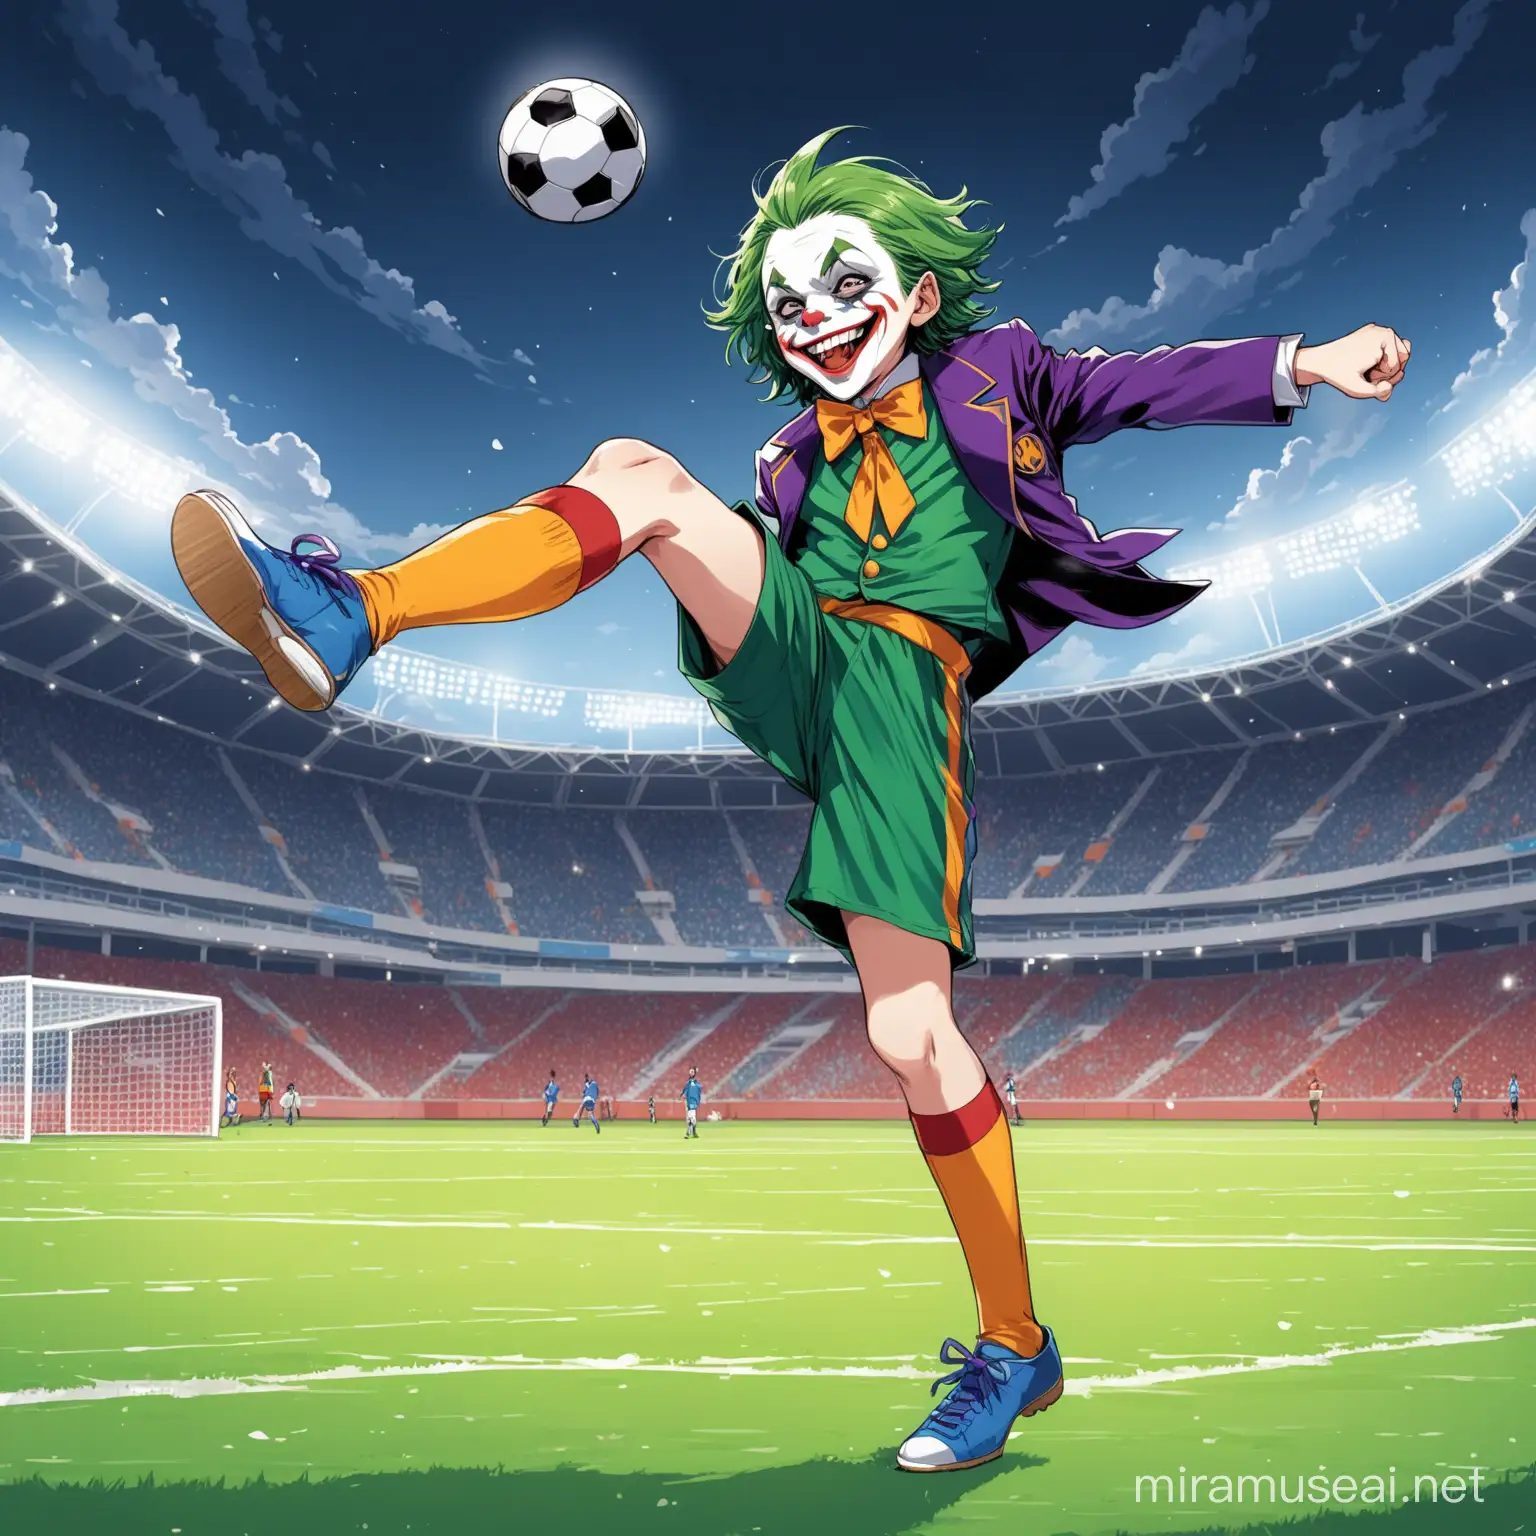 Young Joker Enjoying Soccer at a Stadium